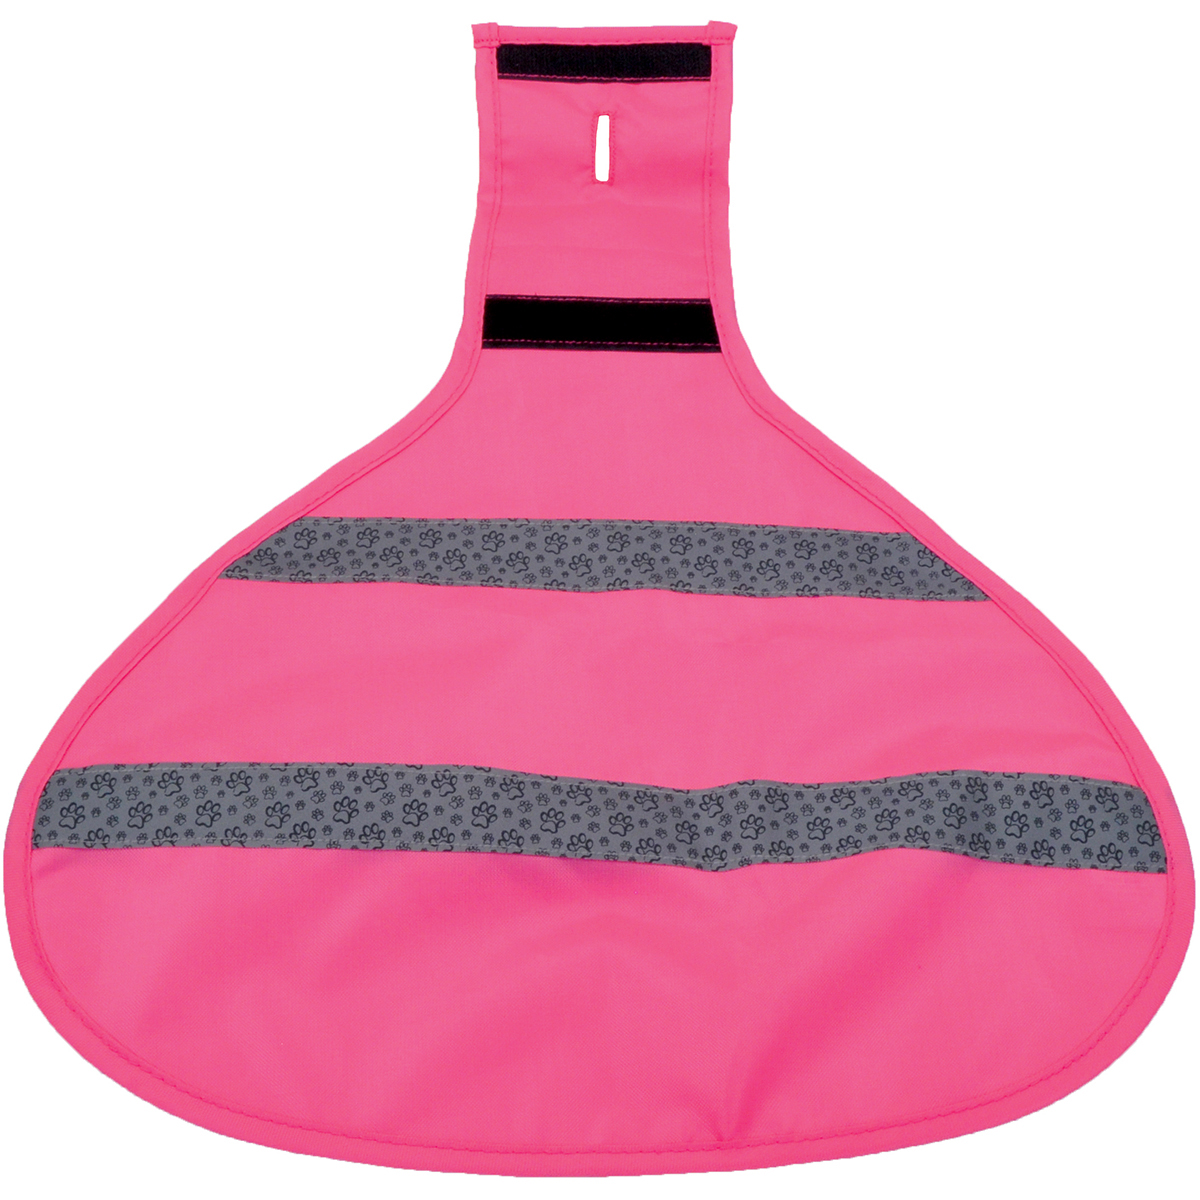 01911npl Reflective Safety Vest, Neon Pink - Large